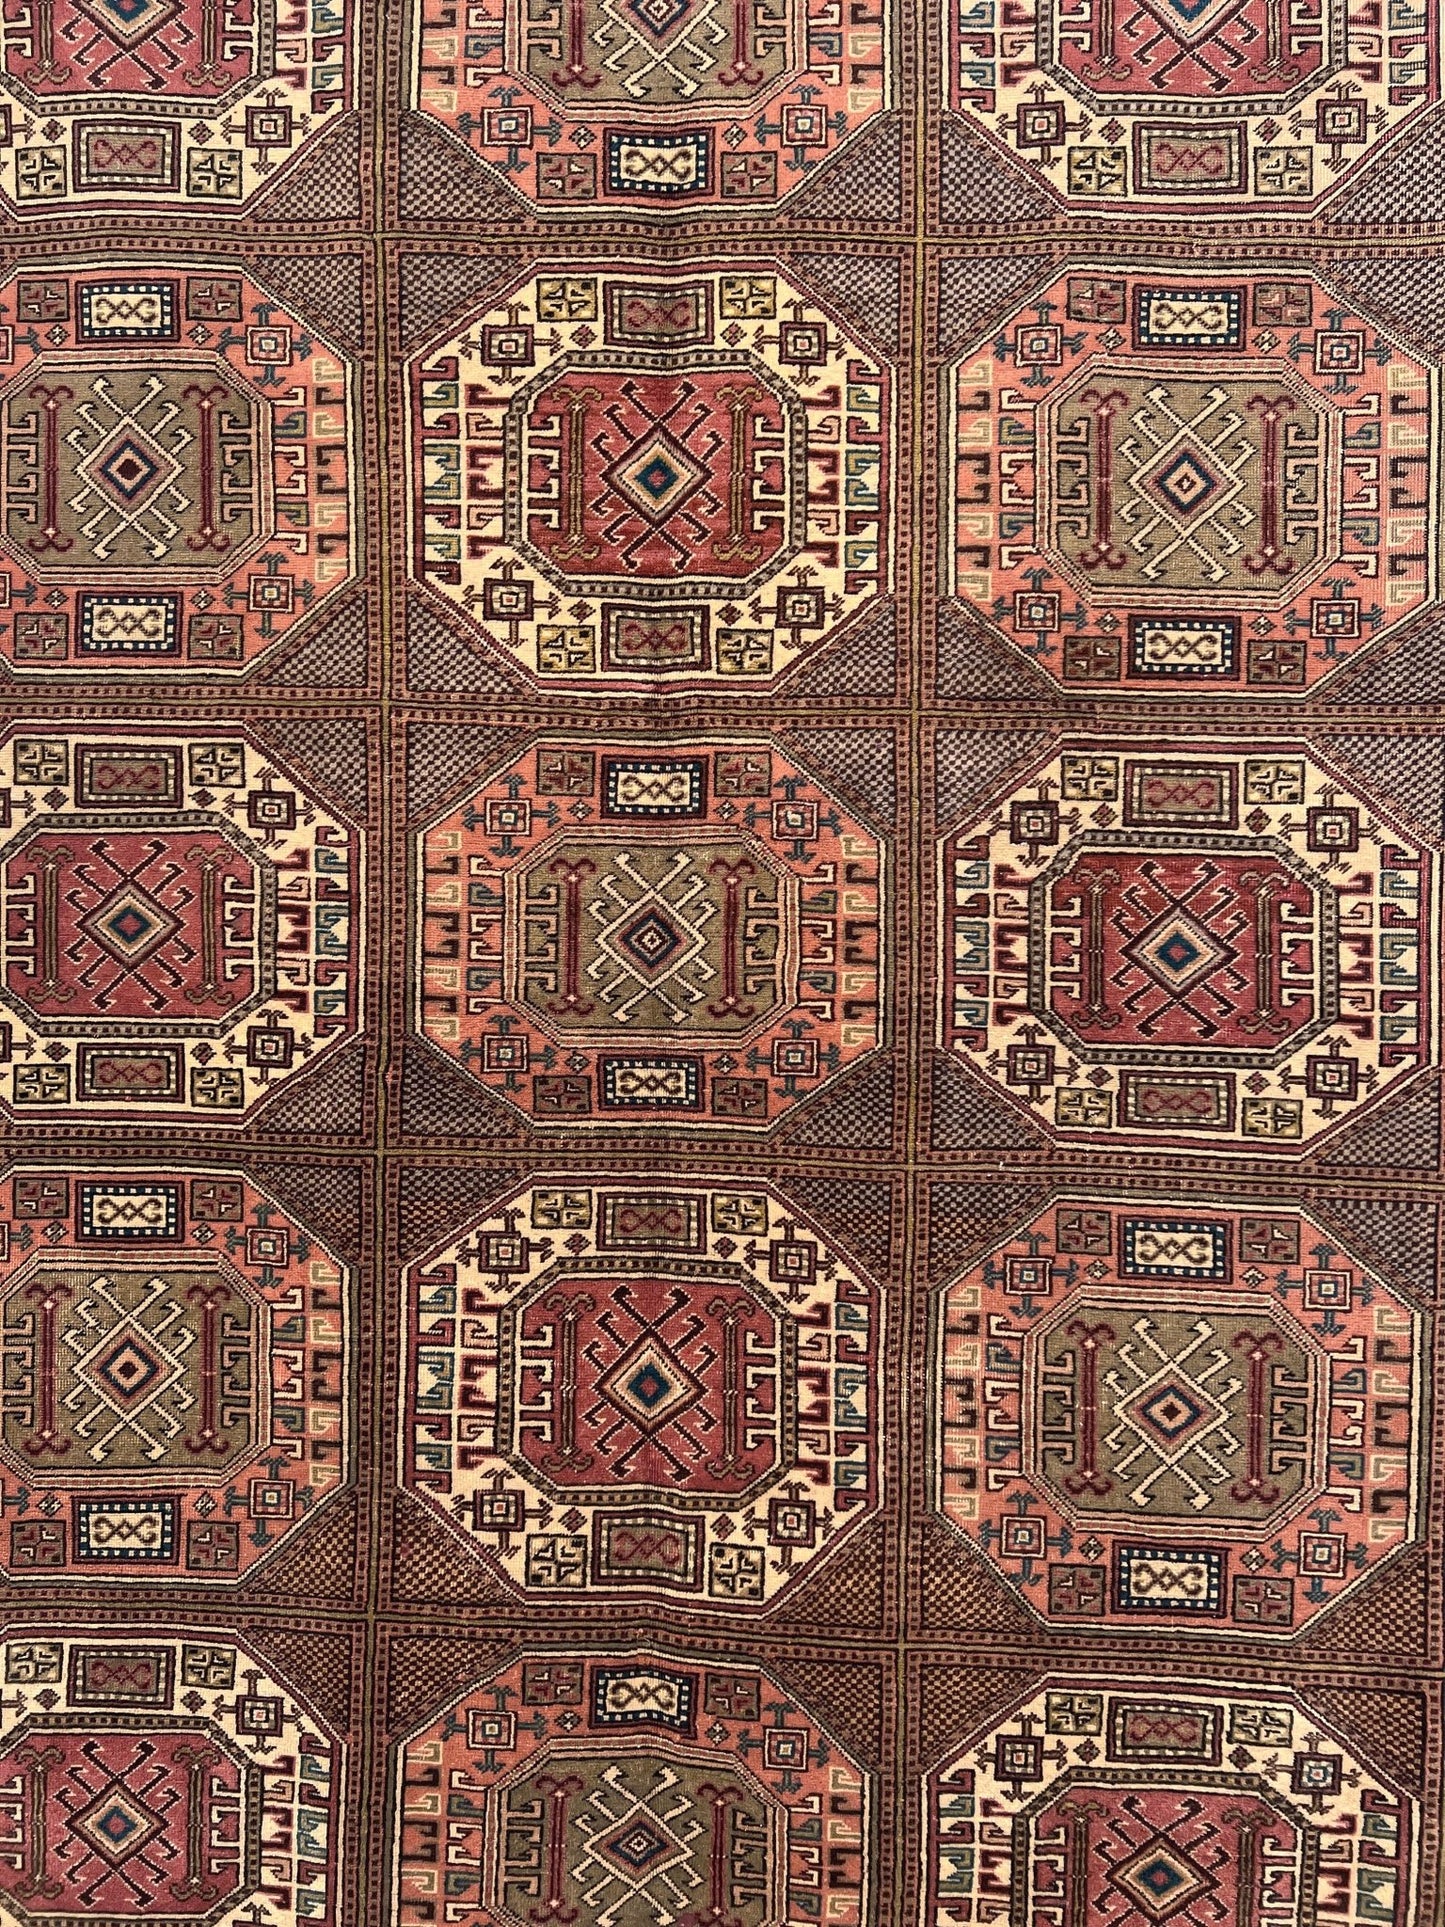 Kayseri Large Turkish Area Rug for living room, bedroom, dining. Oriental rug shop San Mateo CA. Buy vintage rug online